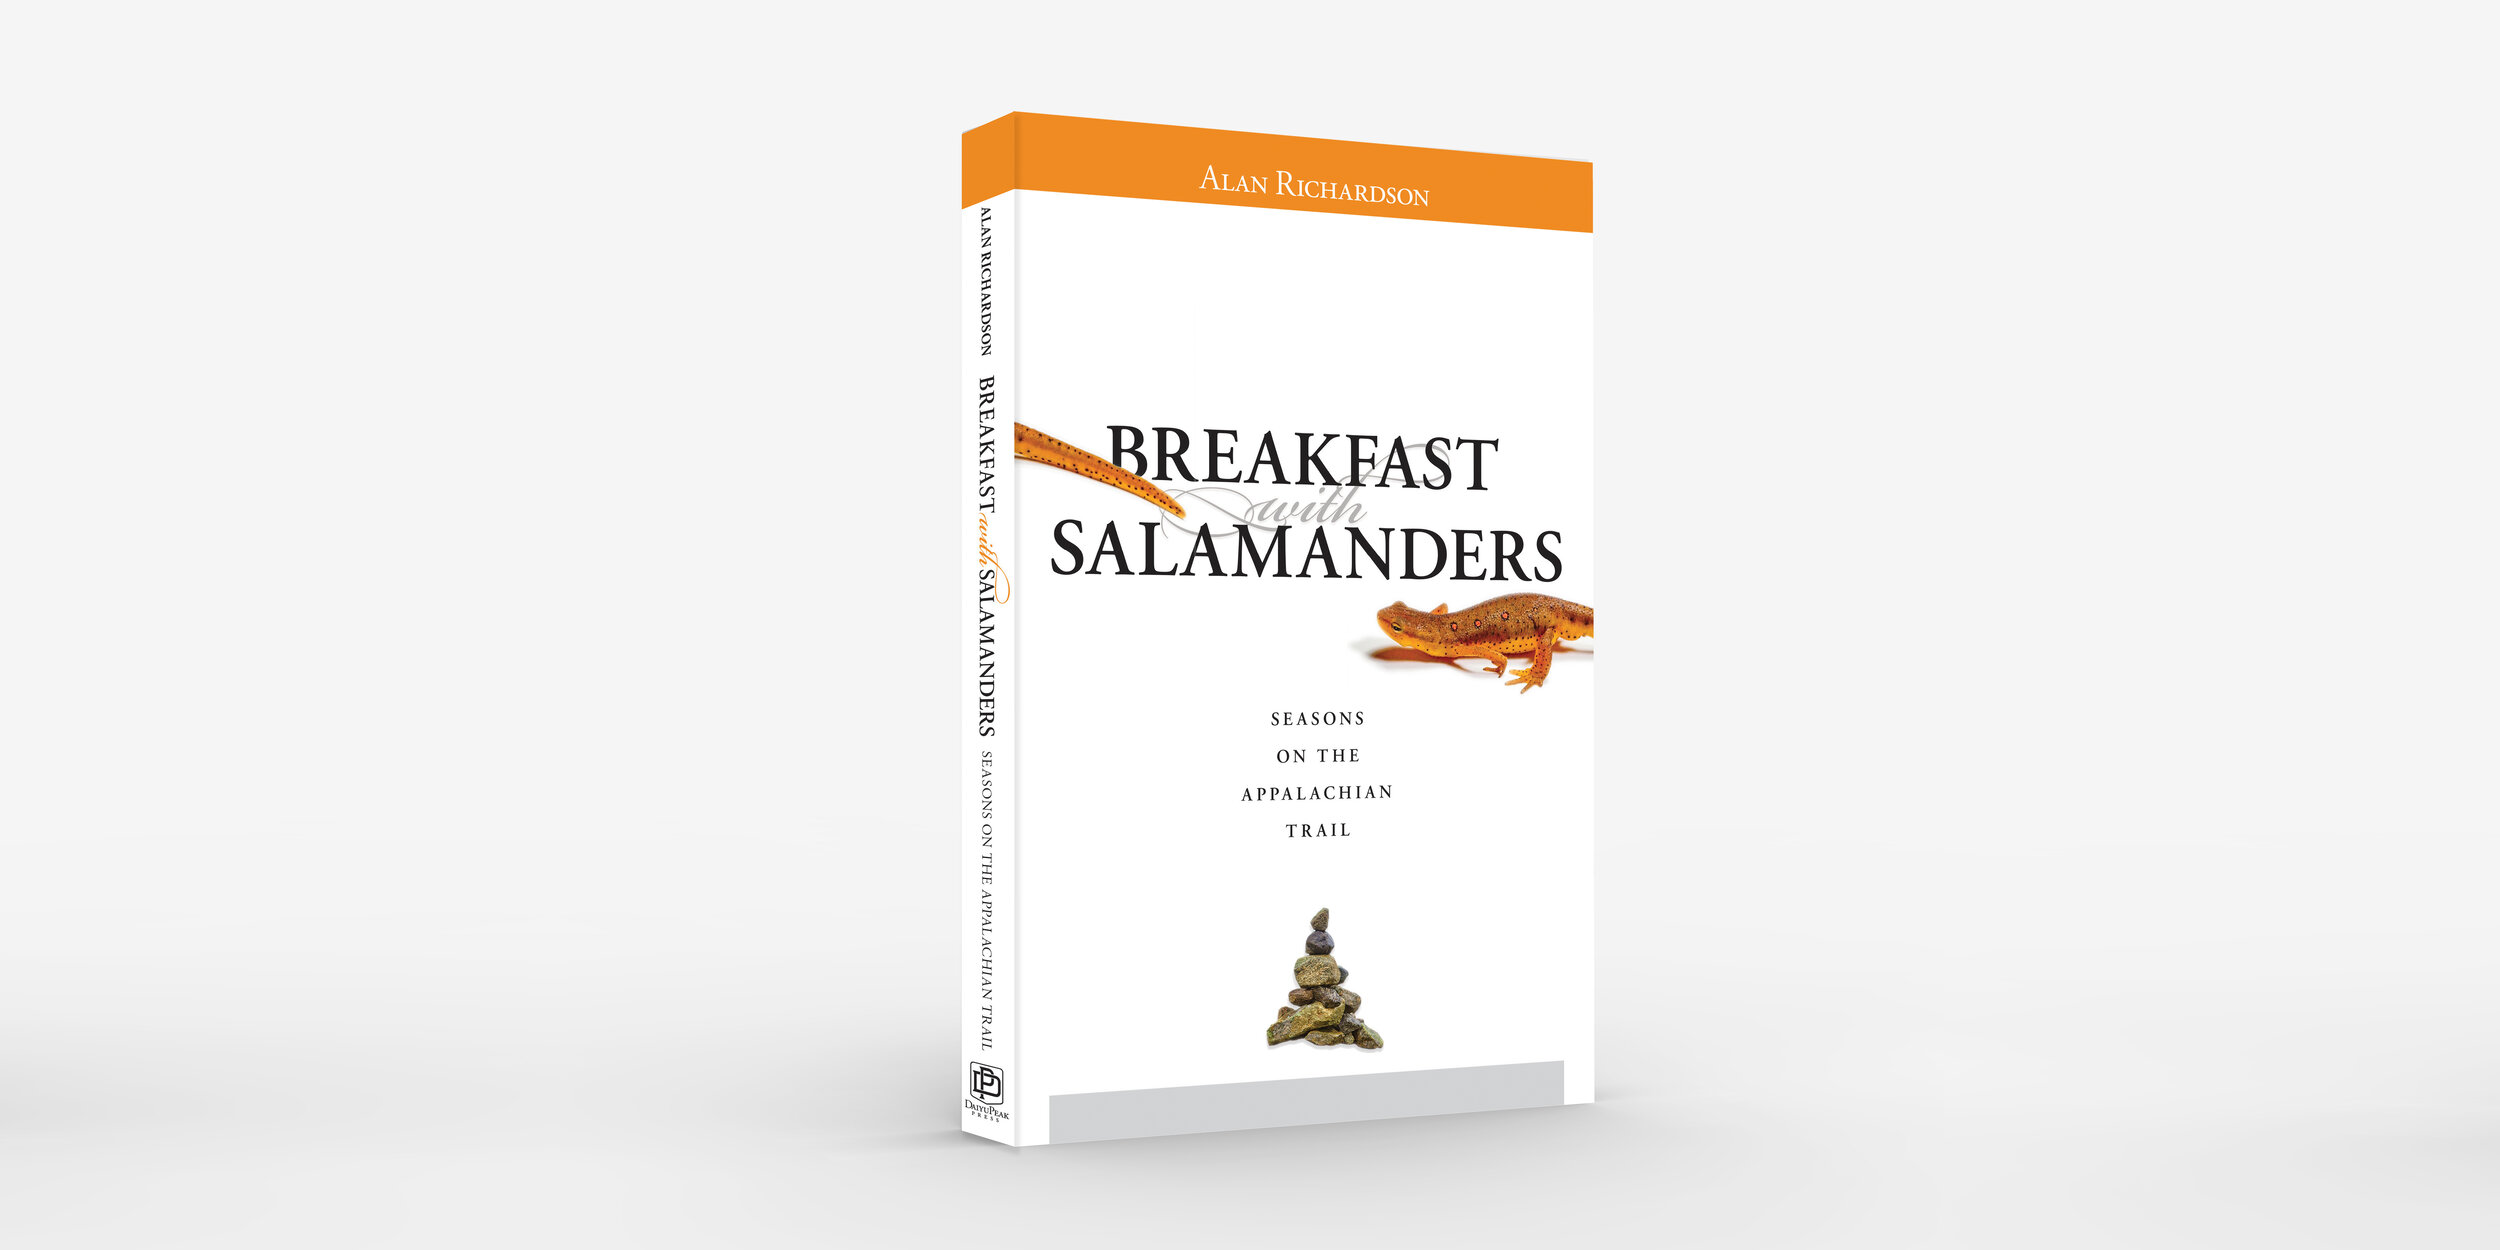 Breakfast With Salamanders by Alan Richardson, Daiyu Press